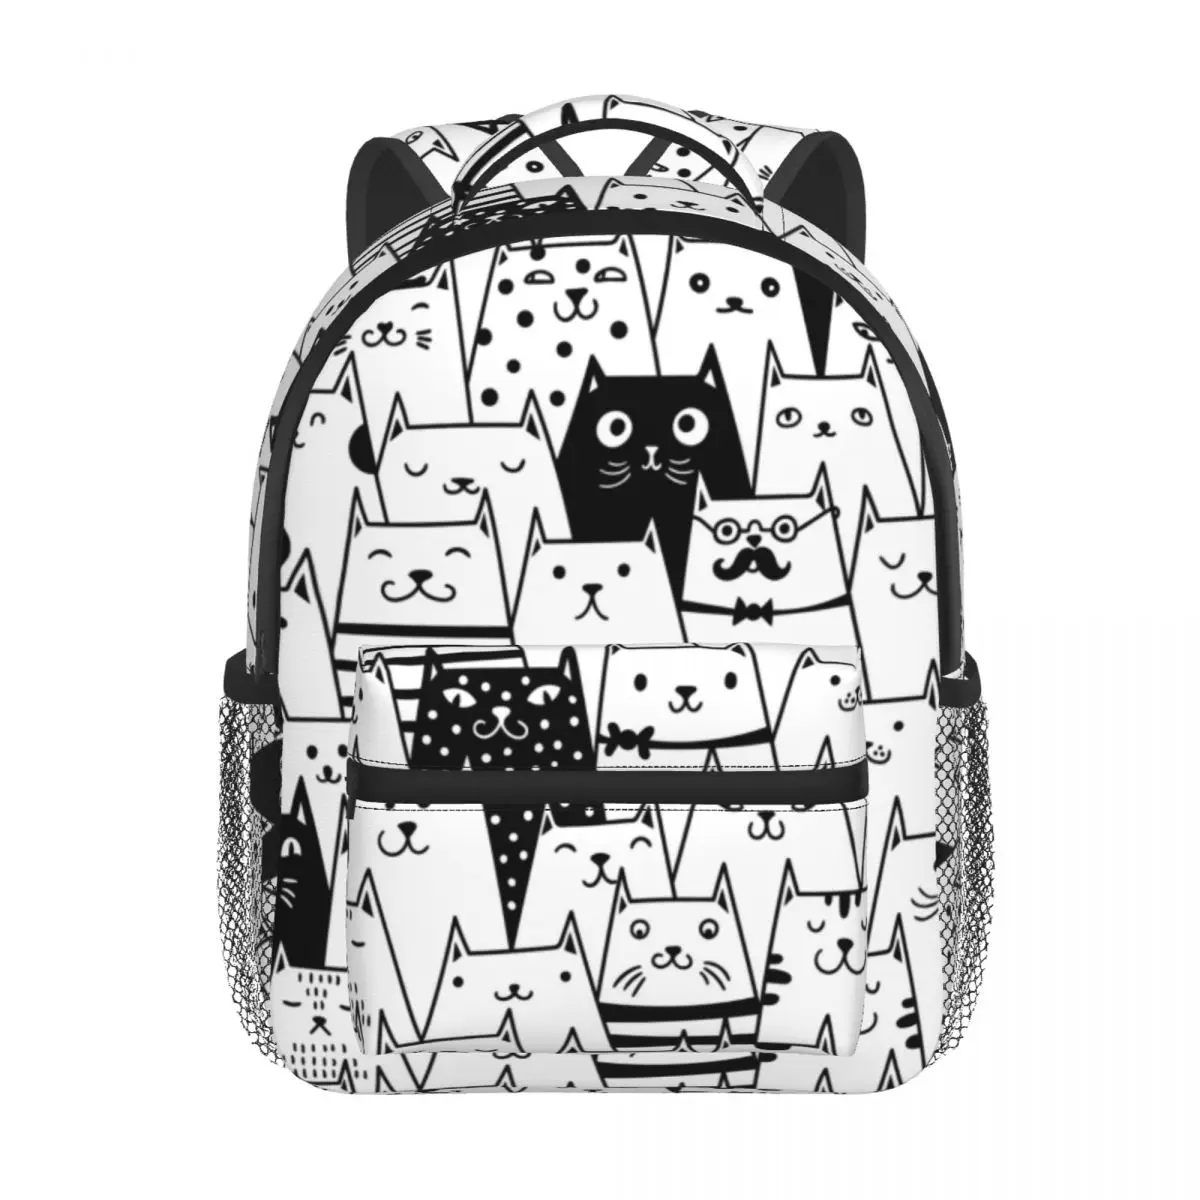 Kids School Backpack Child Schoolbag Bookbag Primary Student Bag for Girls Boys